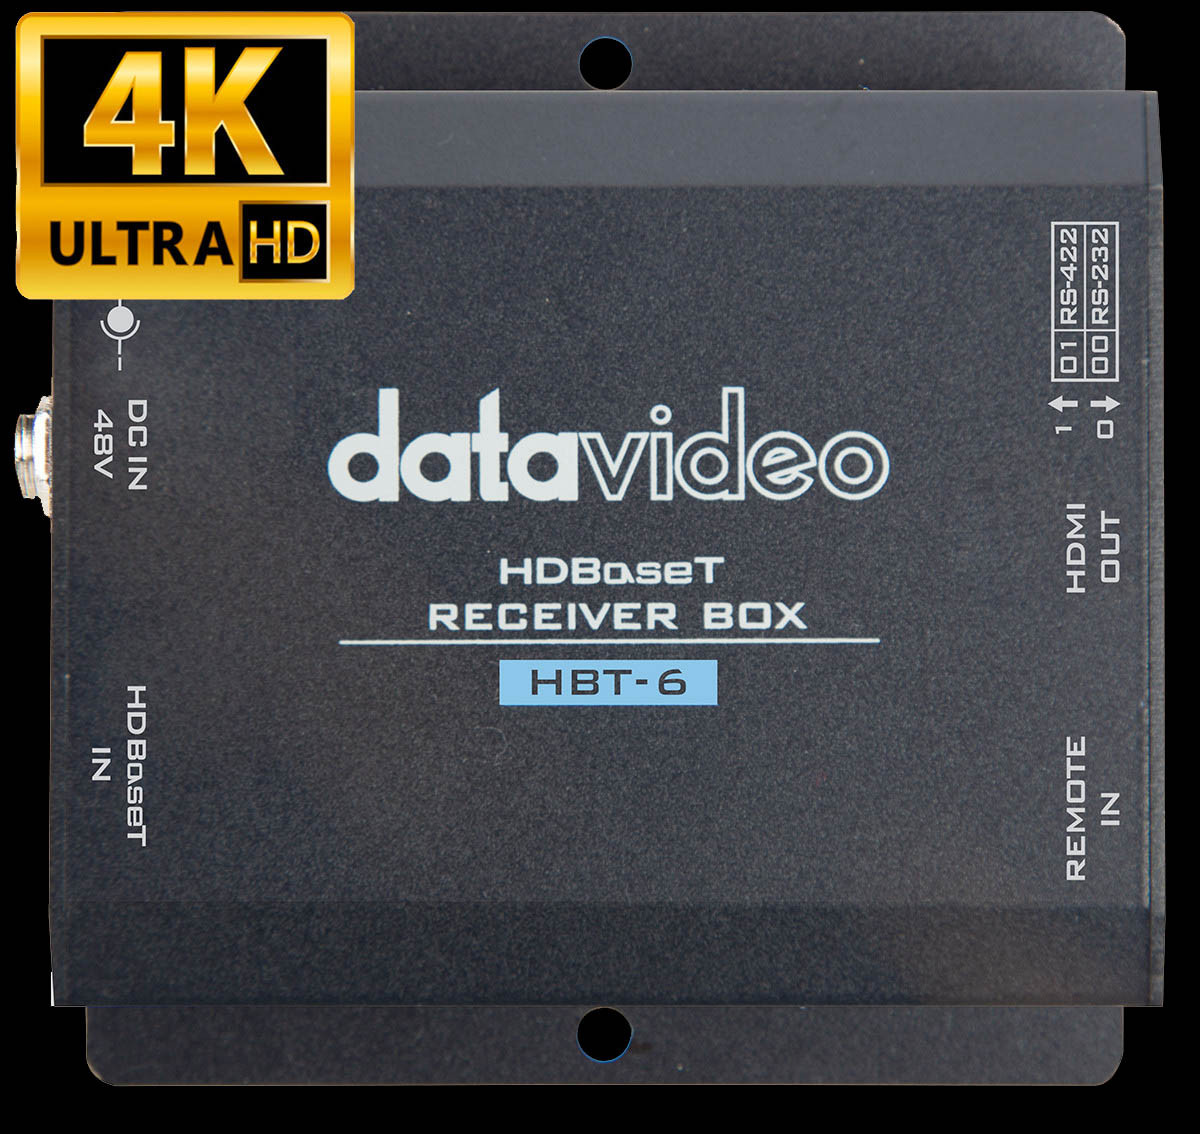 支持HDMI Deep Color和full 3D & 4K@30